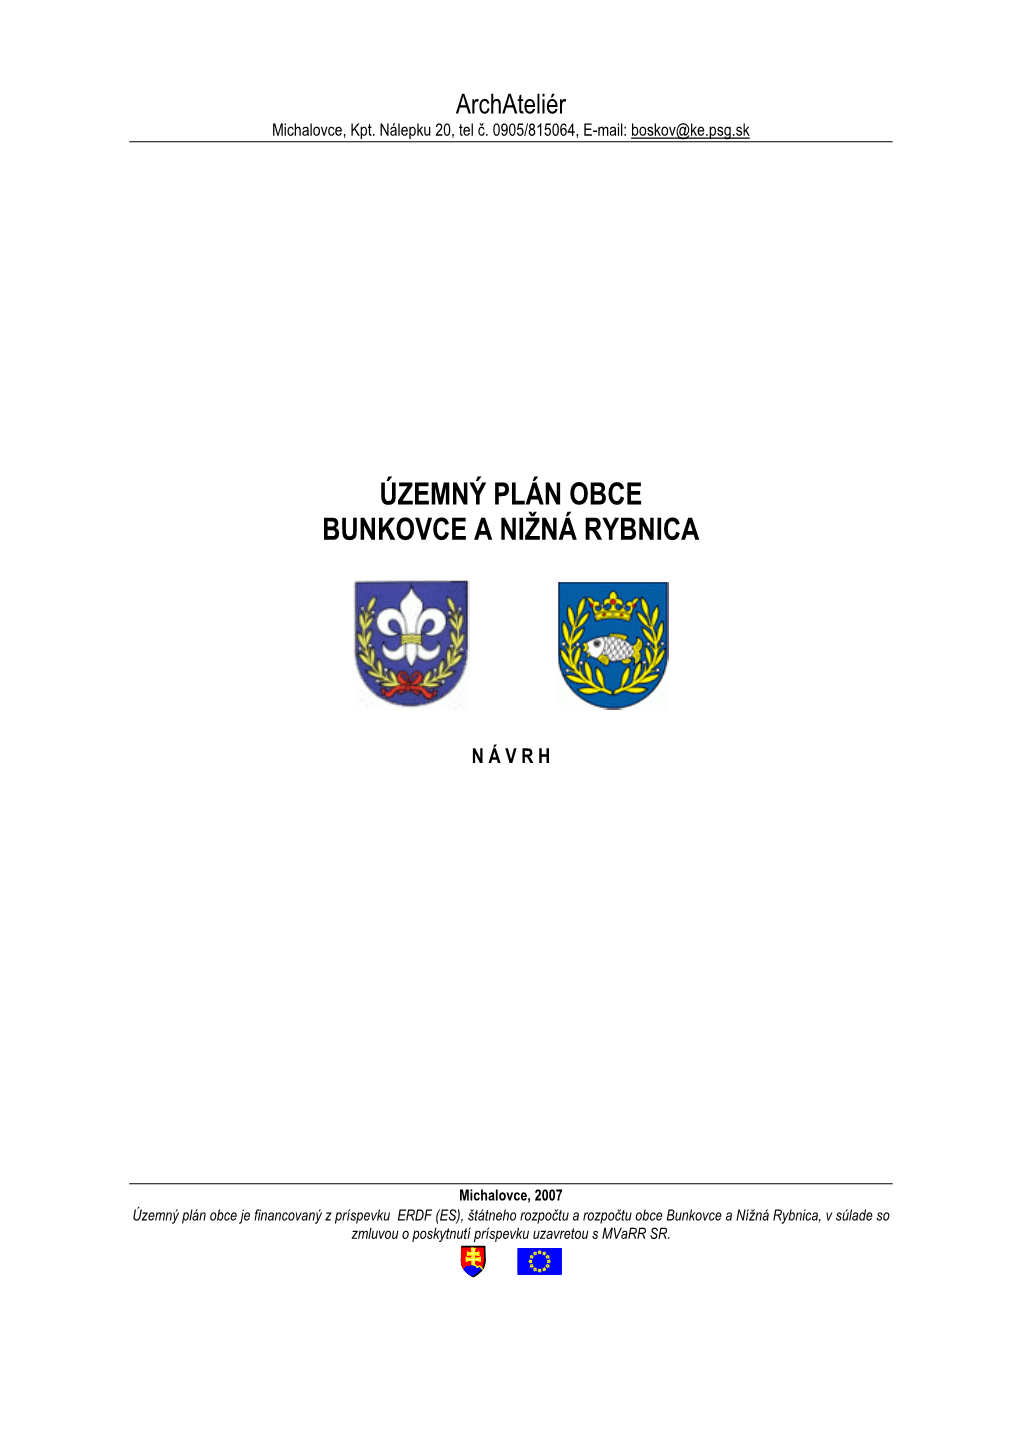 Územný Plán Obce Bunkovce a Nižná Rybnica - Číslo Projektu: 2004-OPZI-34/A-KE-0131 � ÚPN�Obce�Bunkovce�A�Nižná�Rybnica